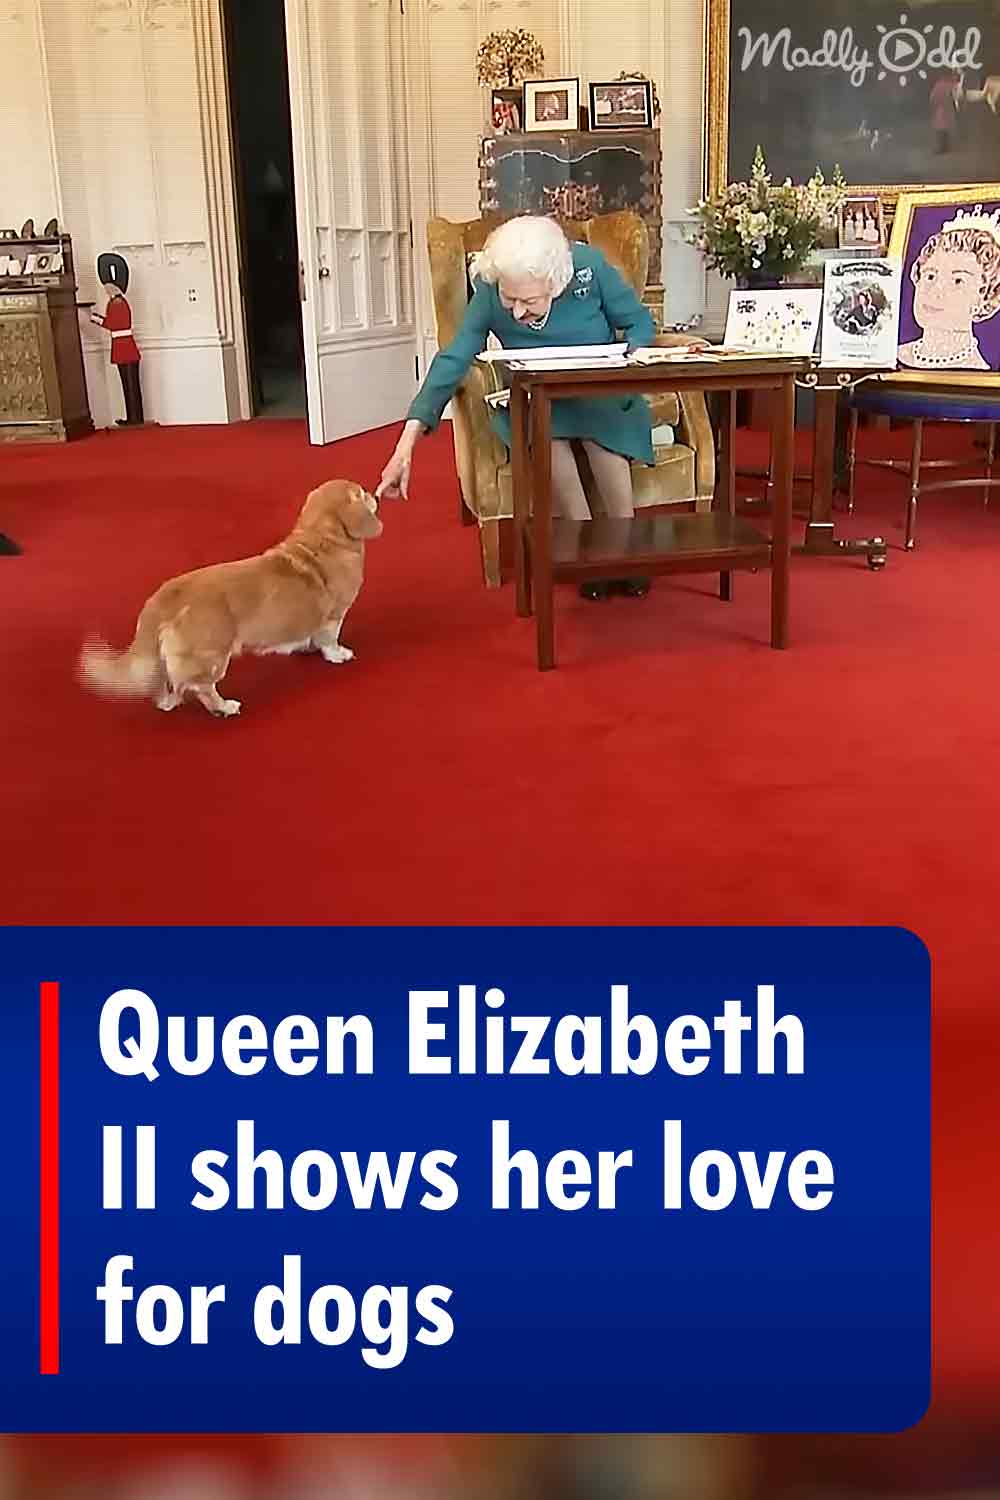 Queen Elizabeth II shows her love for dogs